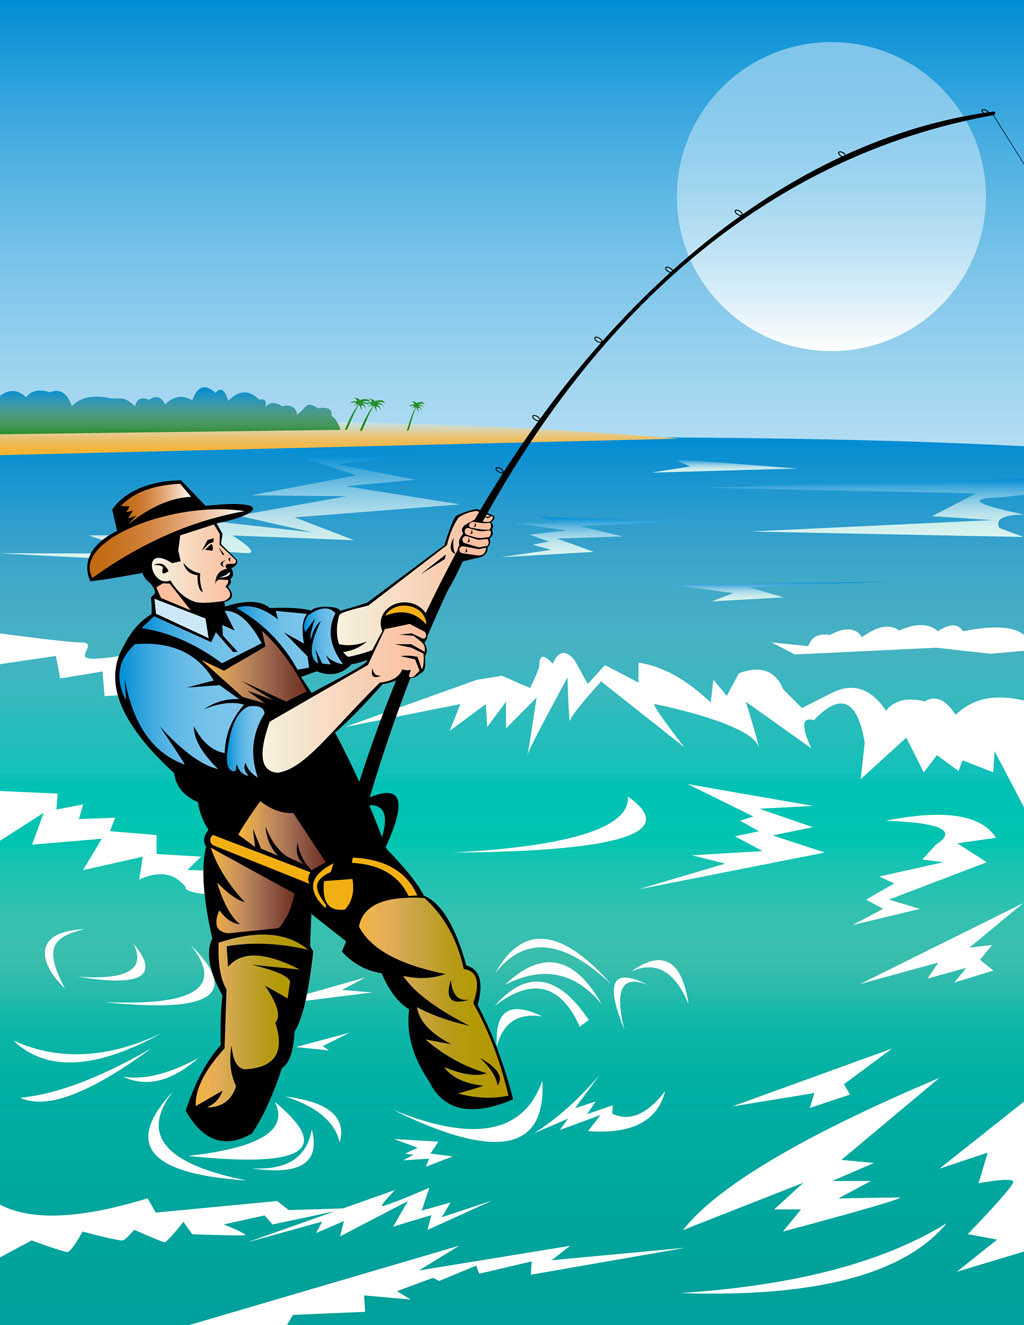 Man fishing on wooden masonry colorful banner Vector Image